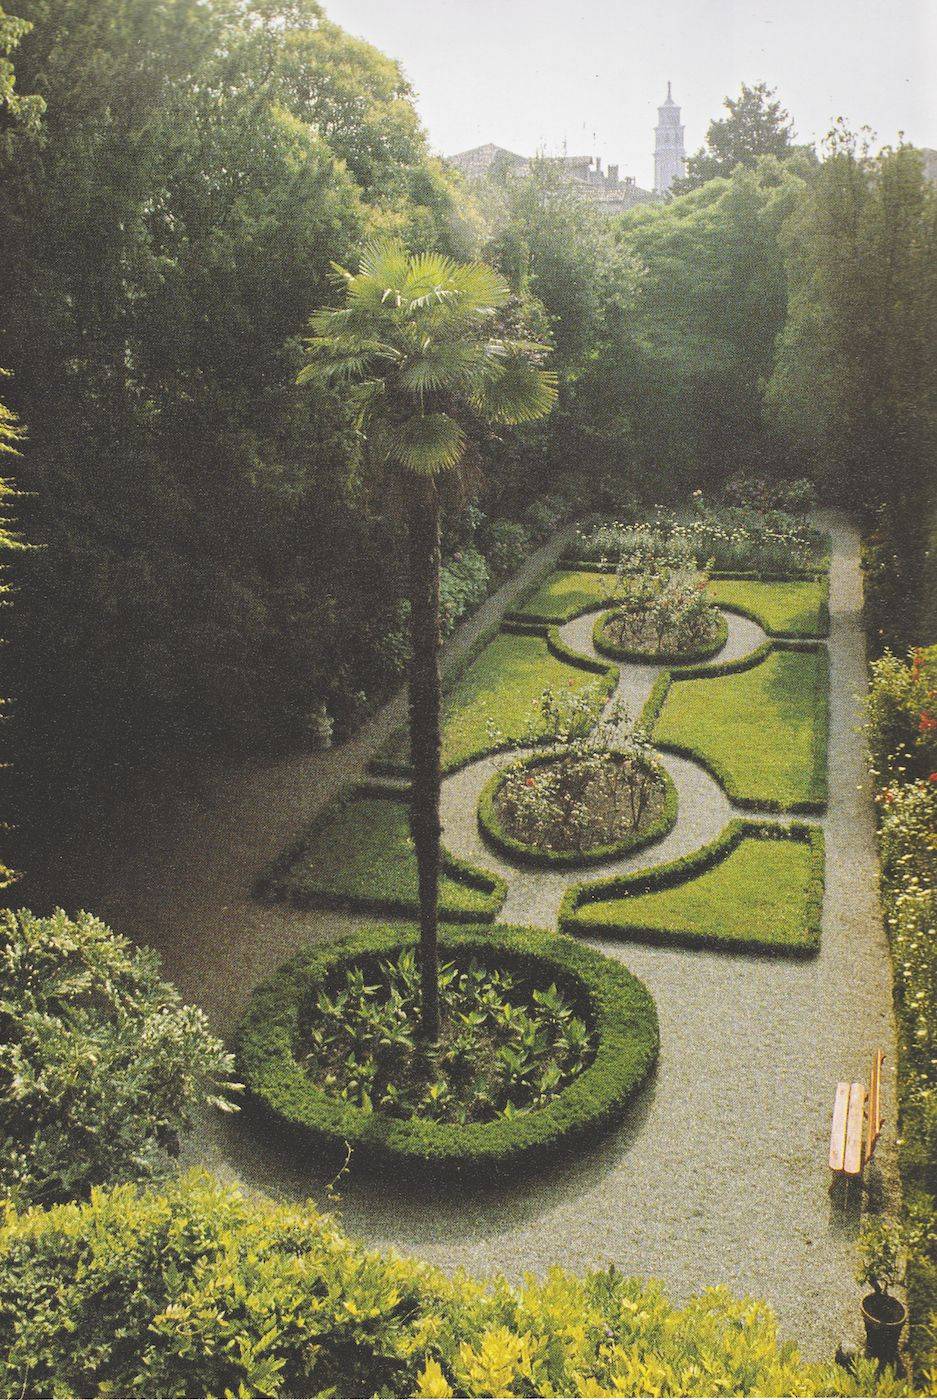 bird view of the garden